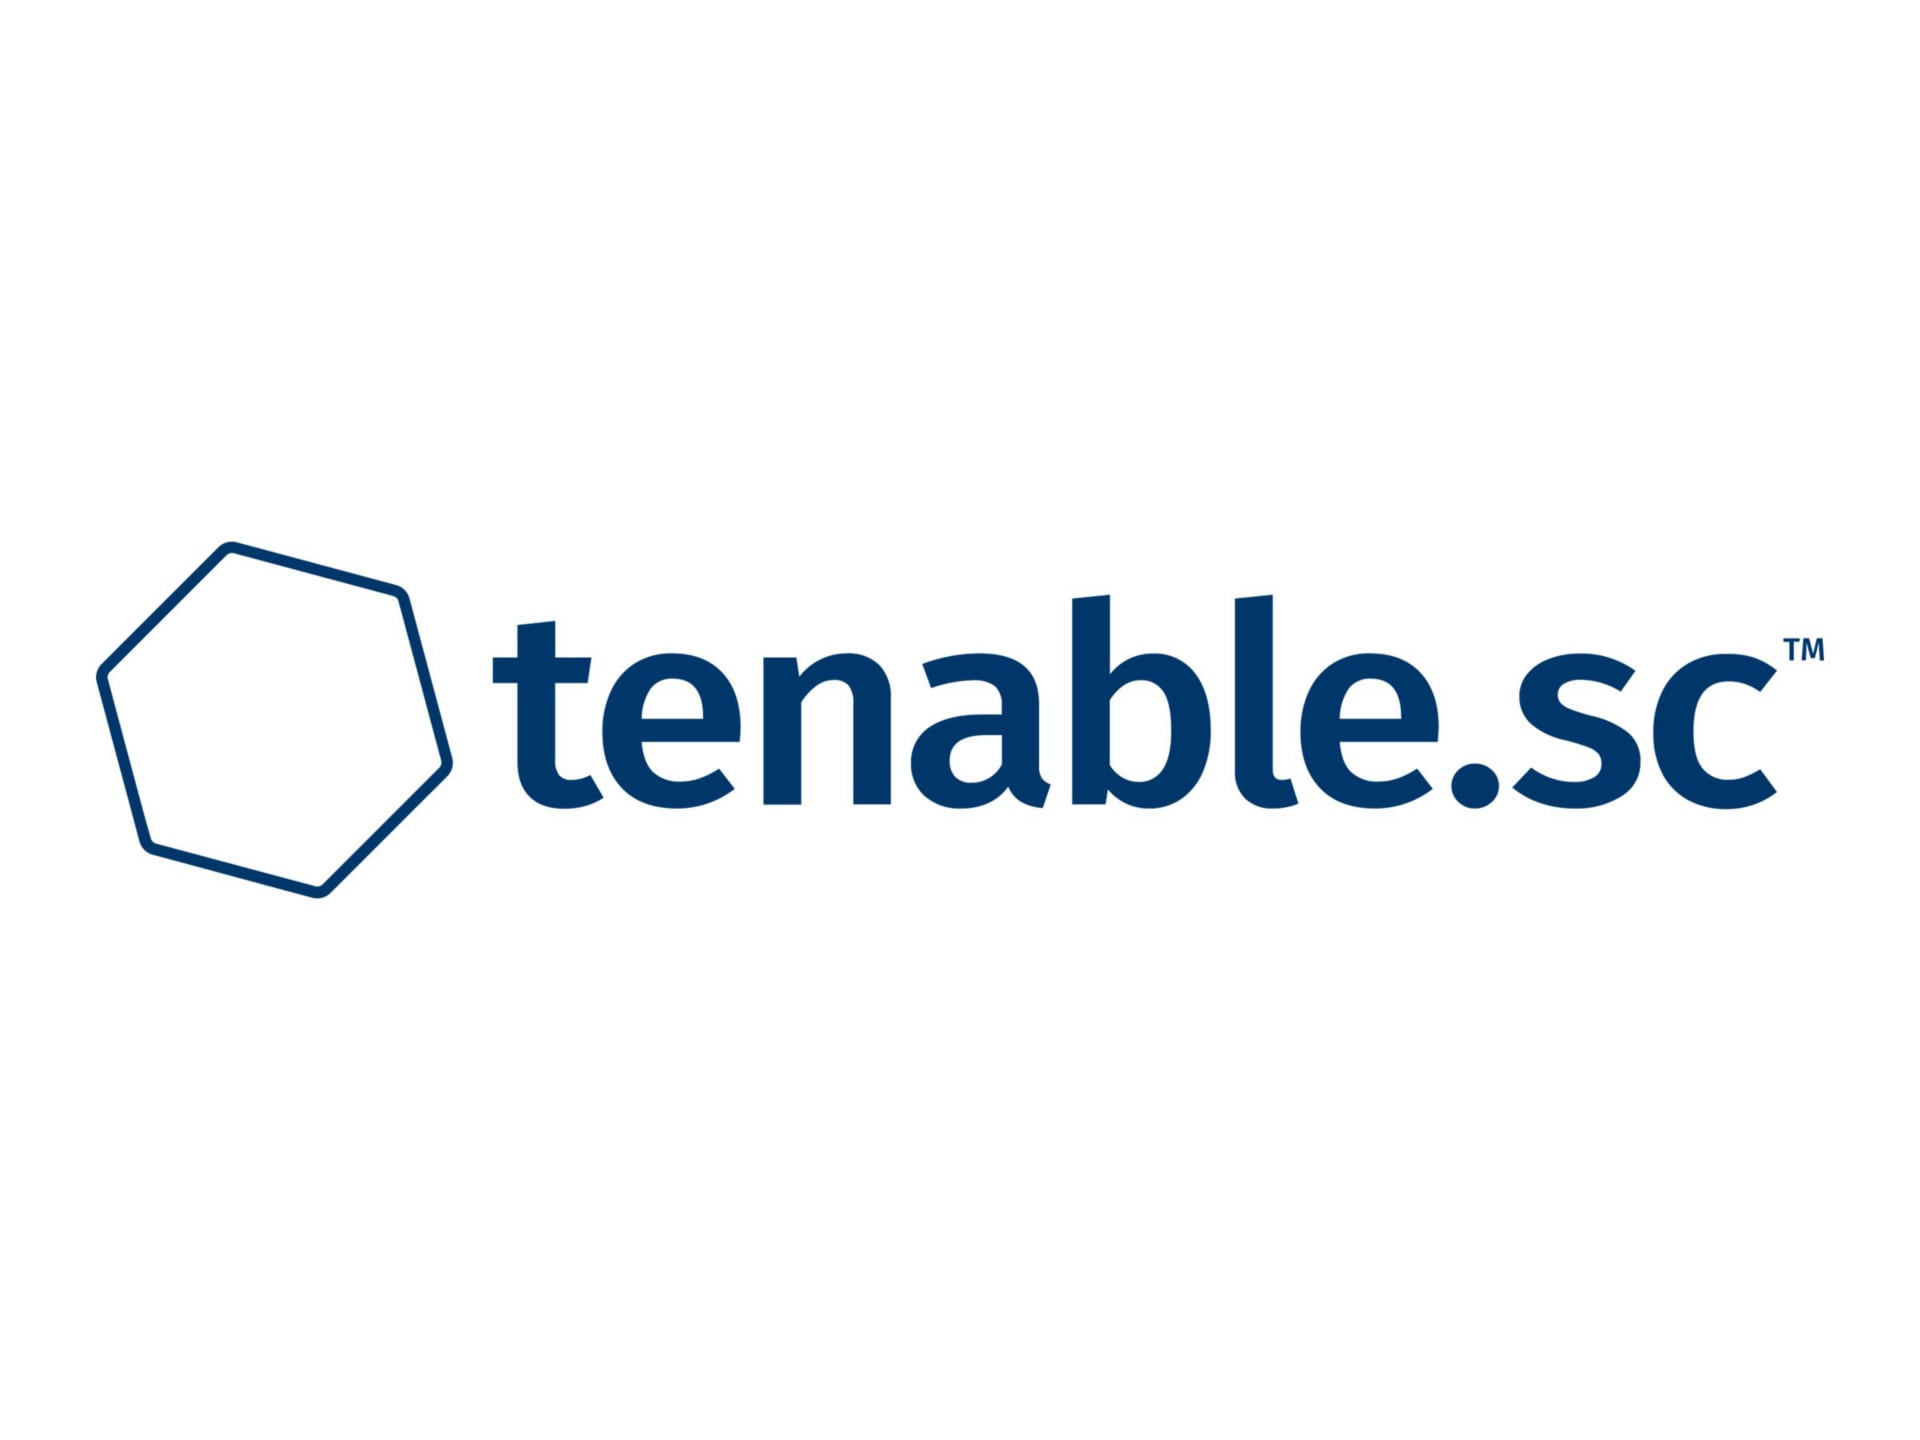 Tenable.sc - maintenance (1 year) - 1 license